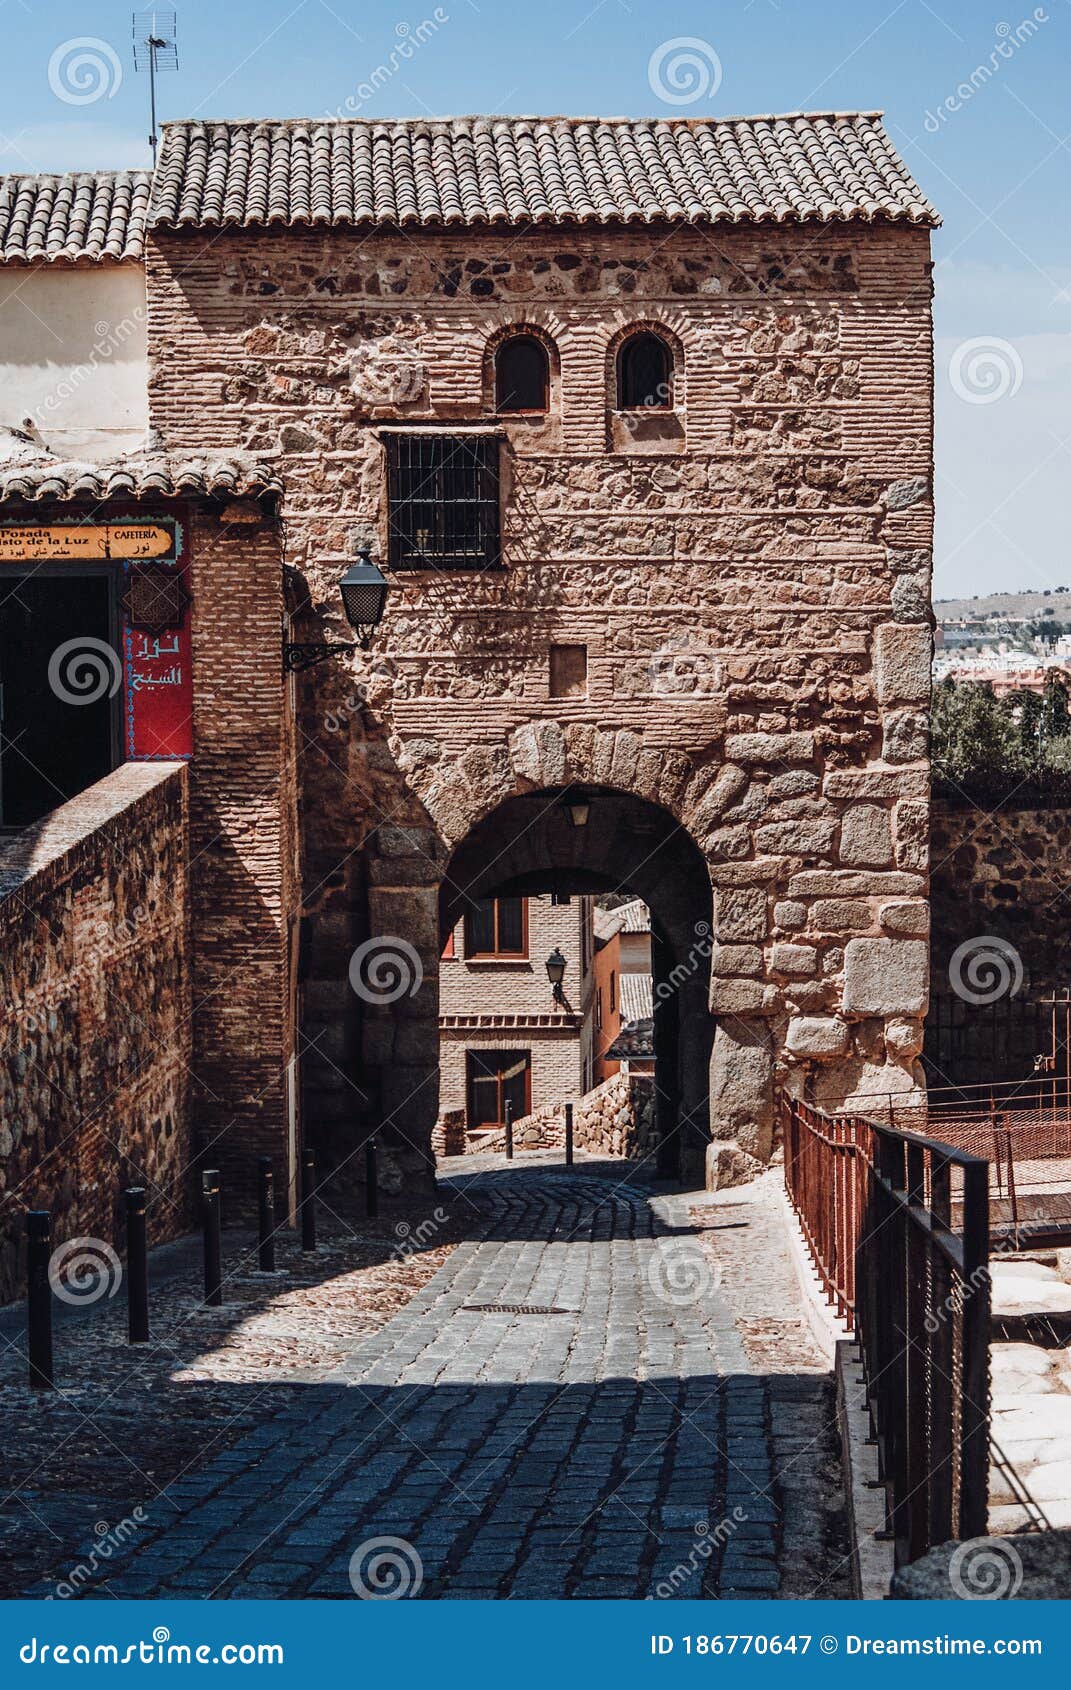 bab-al-mardum gate of the wall of toledo